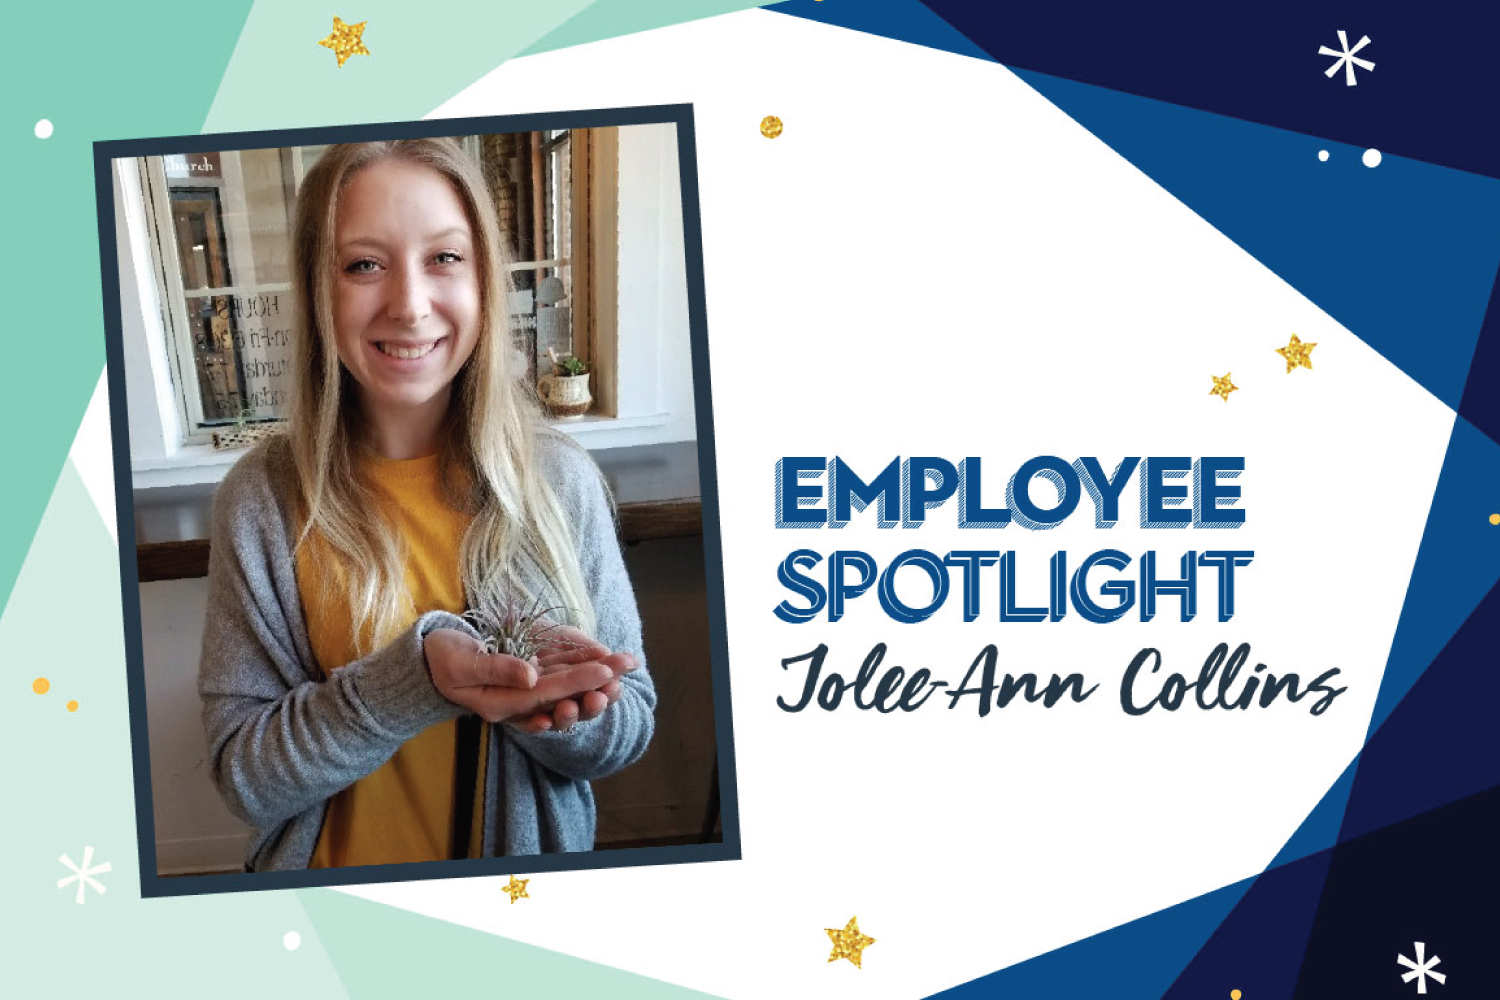 Employee spotlight: Jolee-Ann Collins